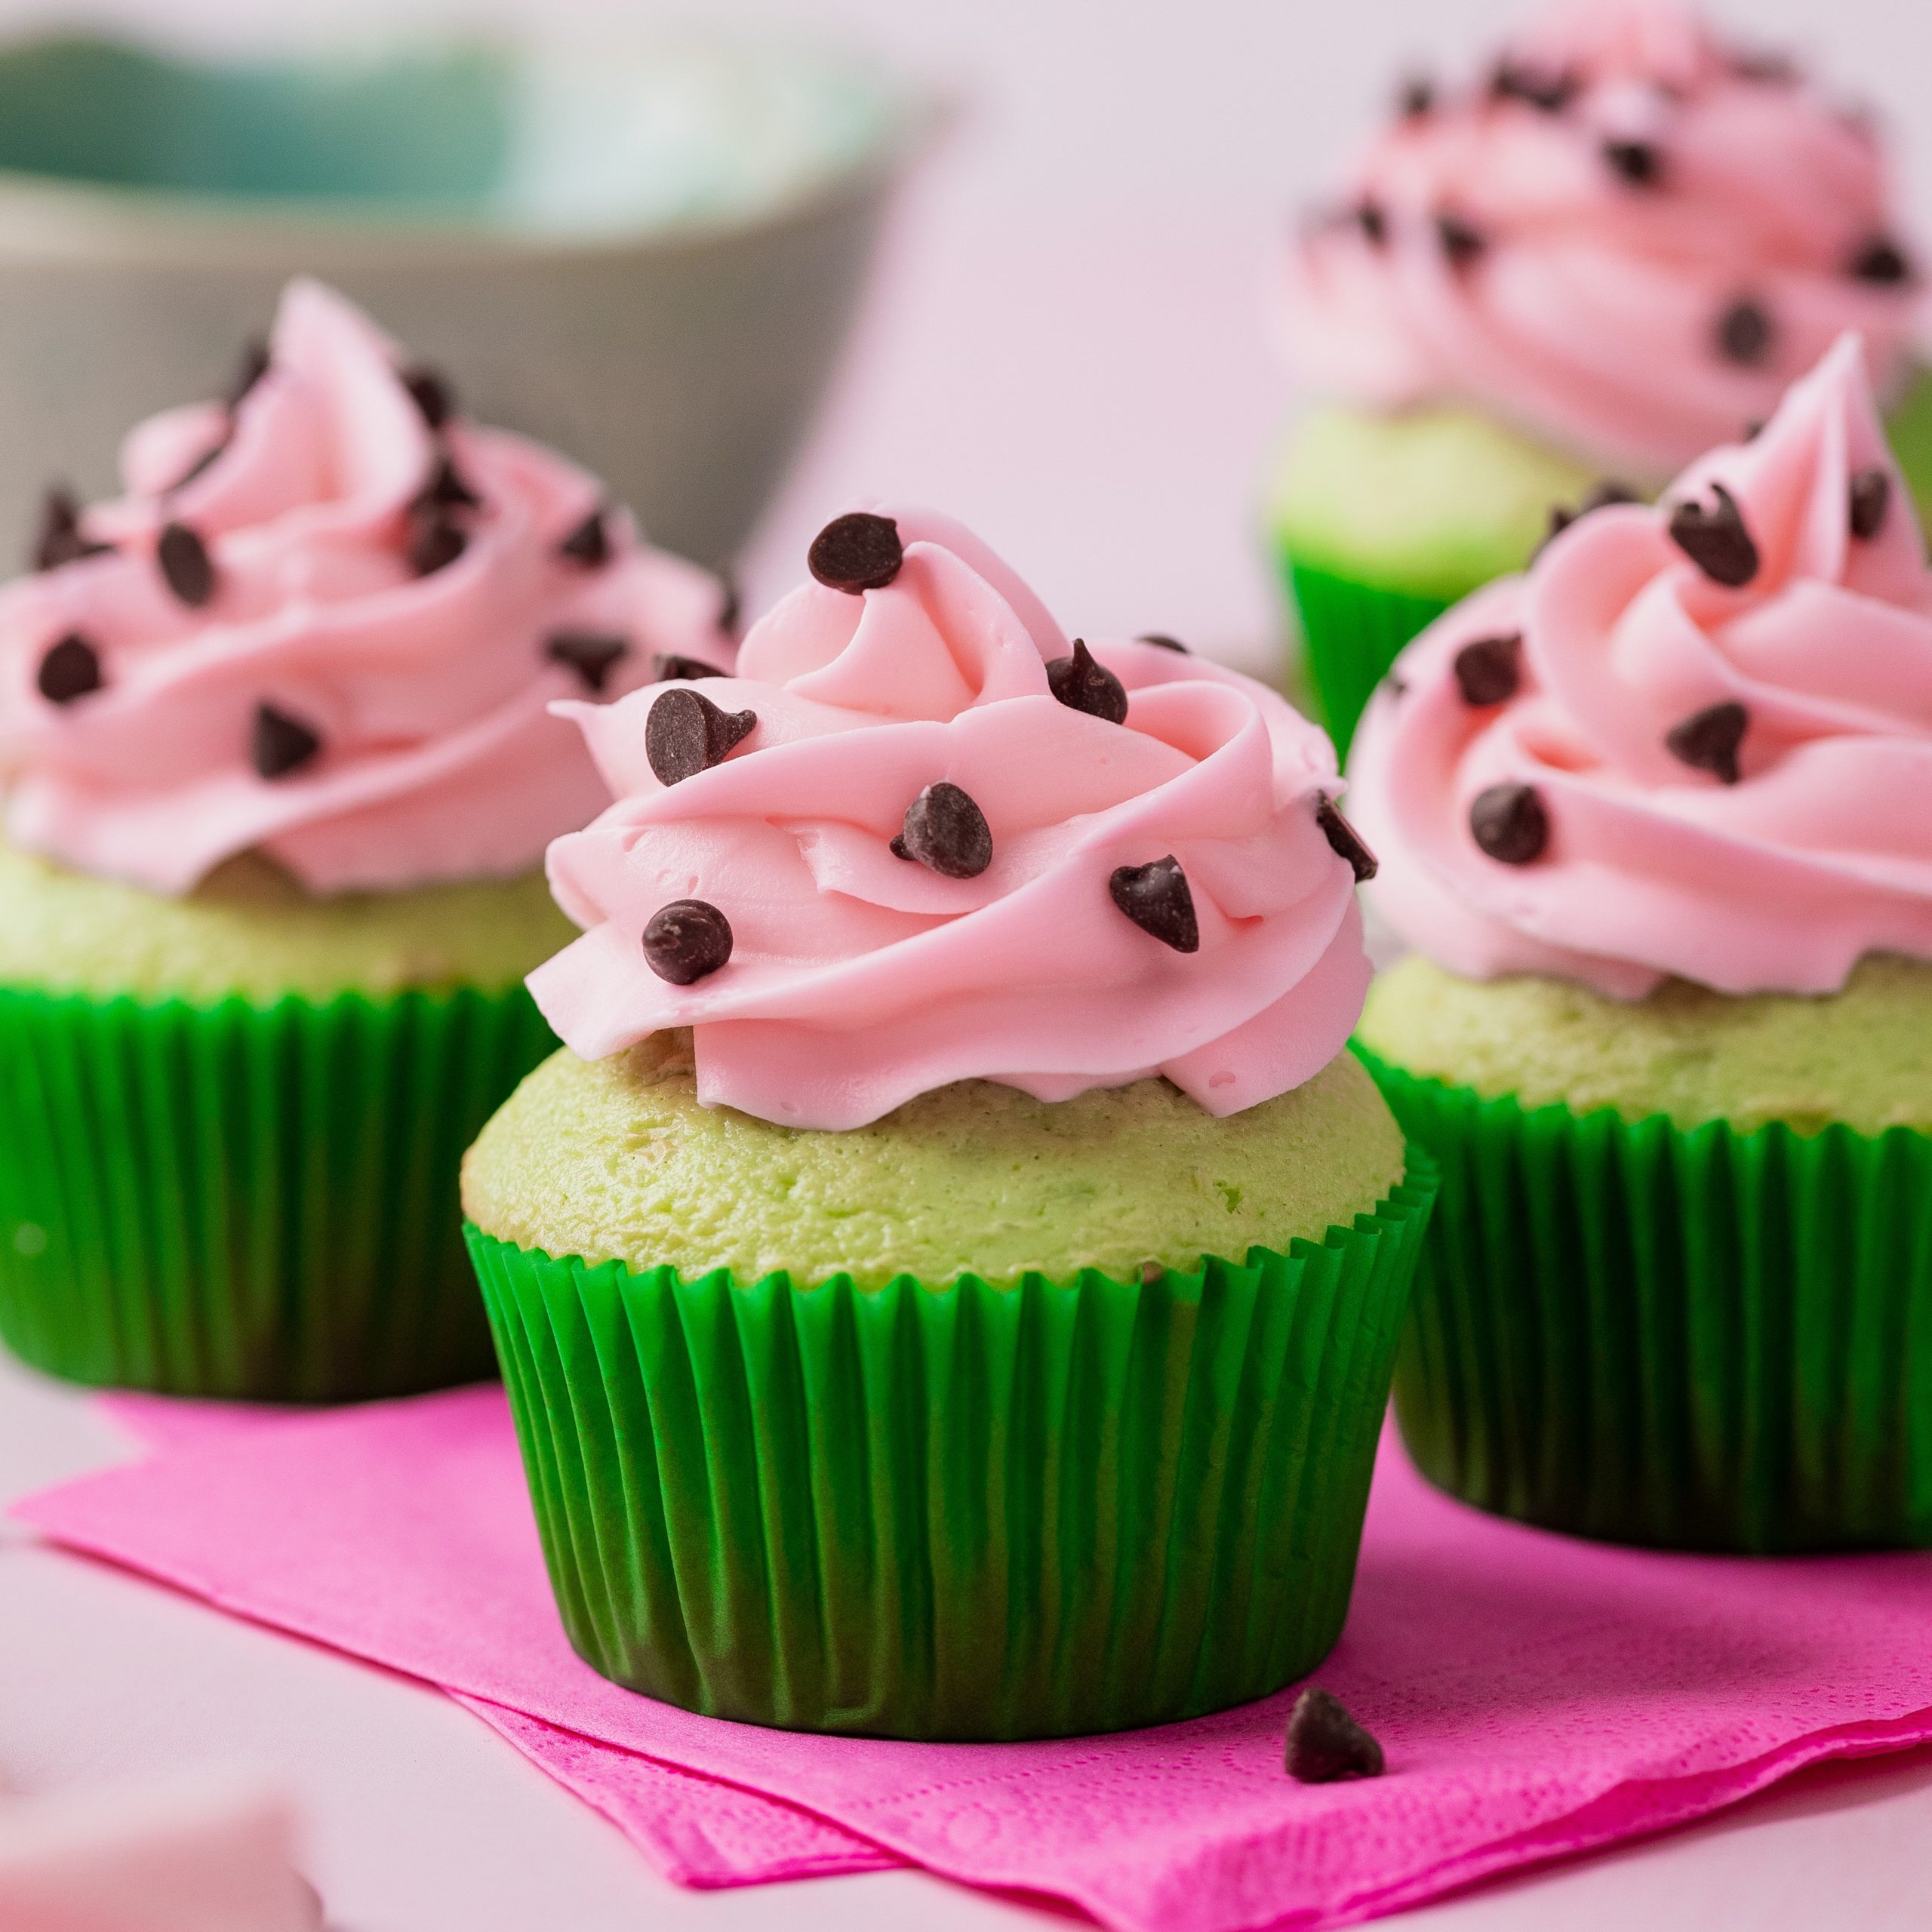 Watermelon Cupcakes Recipe